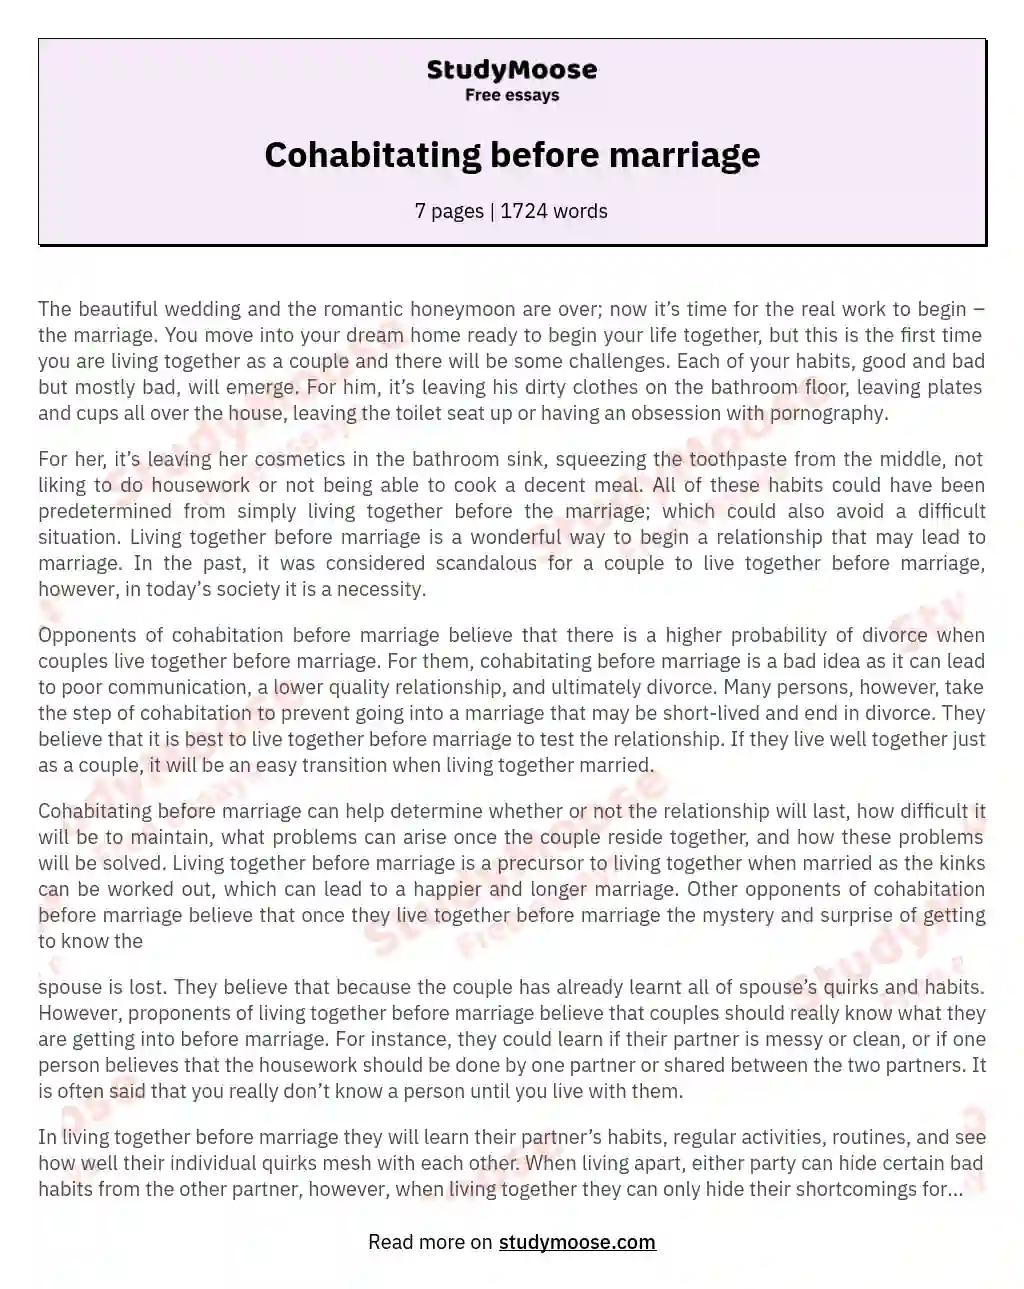 Cohabitating before marriage essay